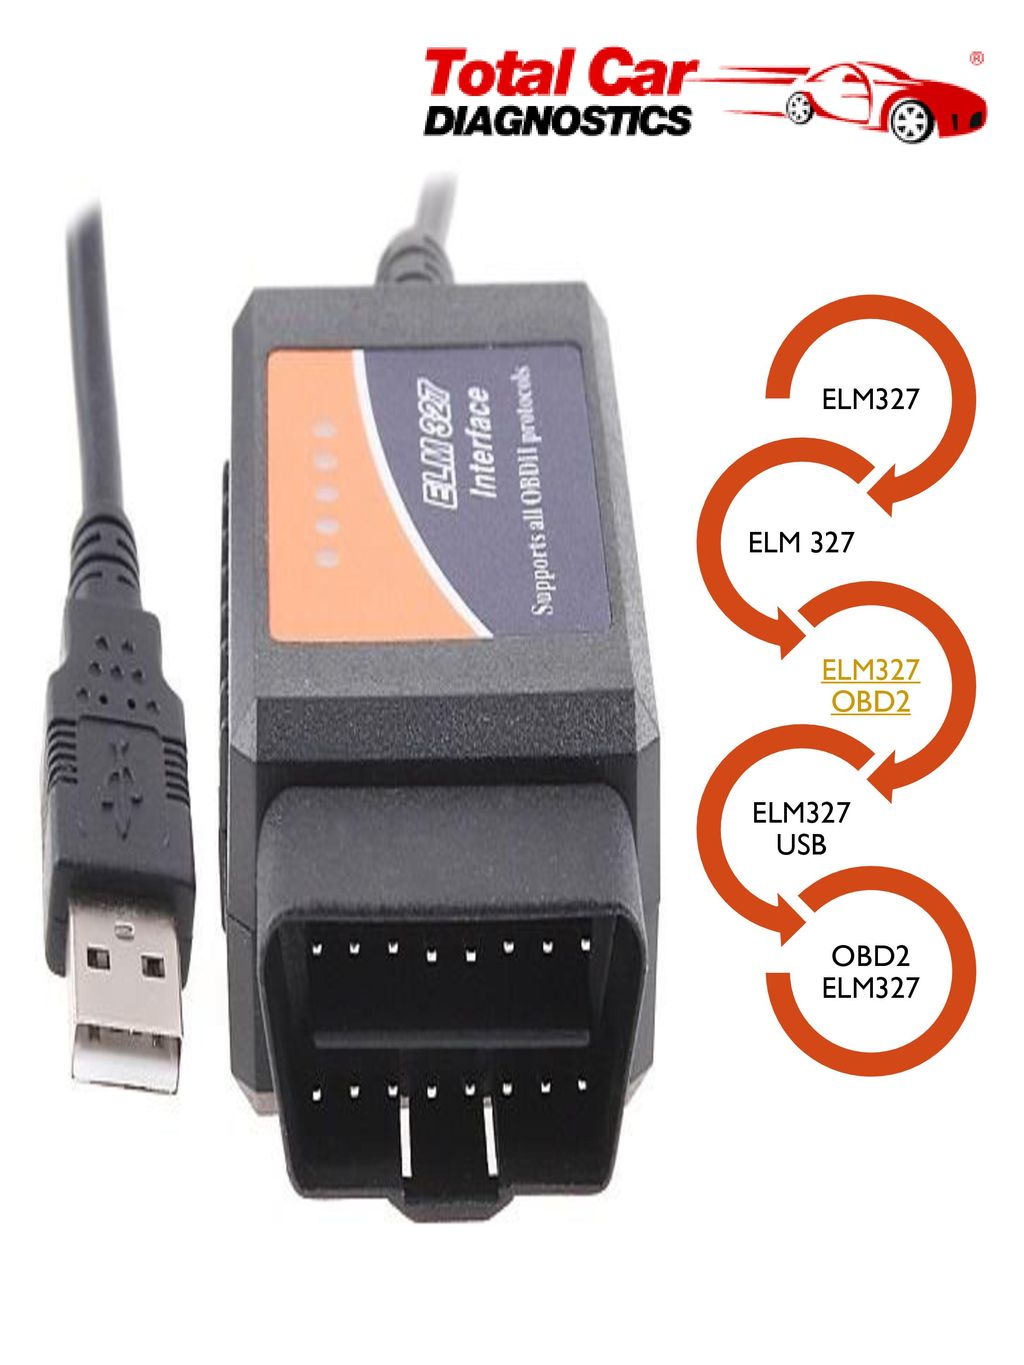 Dongle to USB Scan Tool OBD2 ELM327, OBD2 Computer Software, ELM327